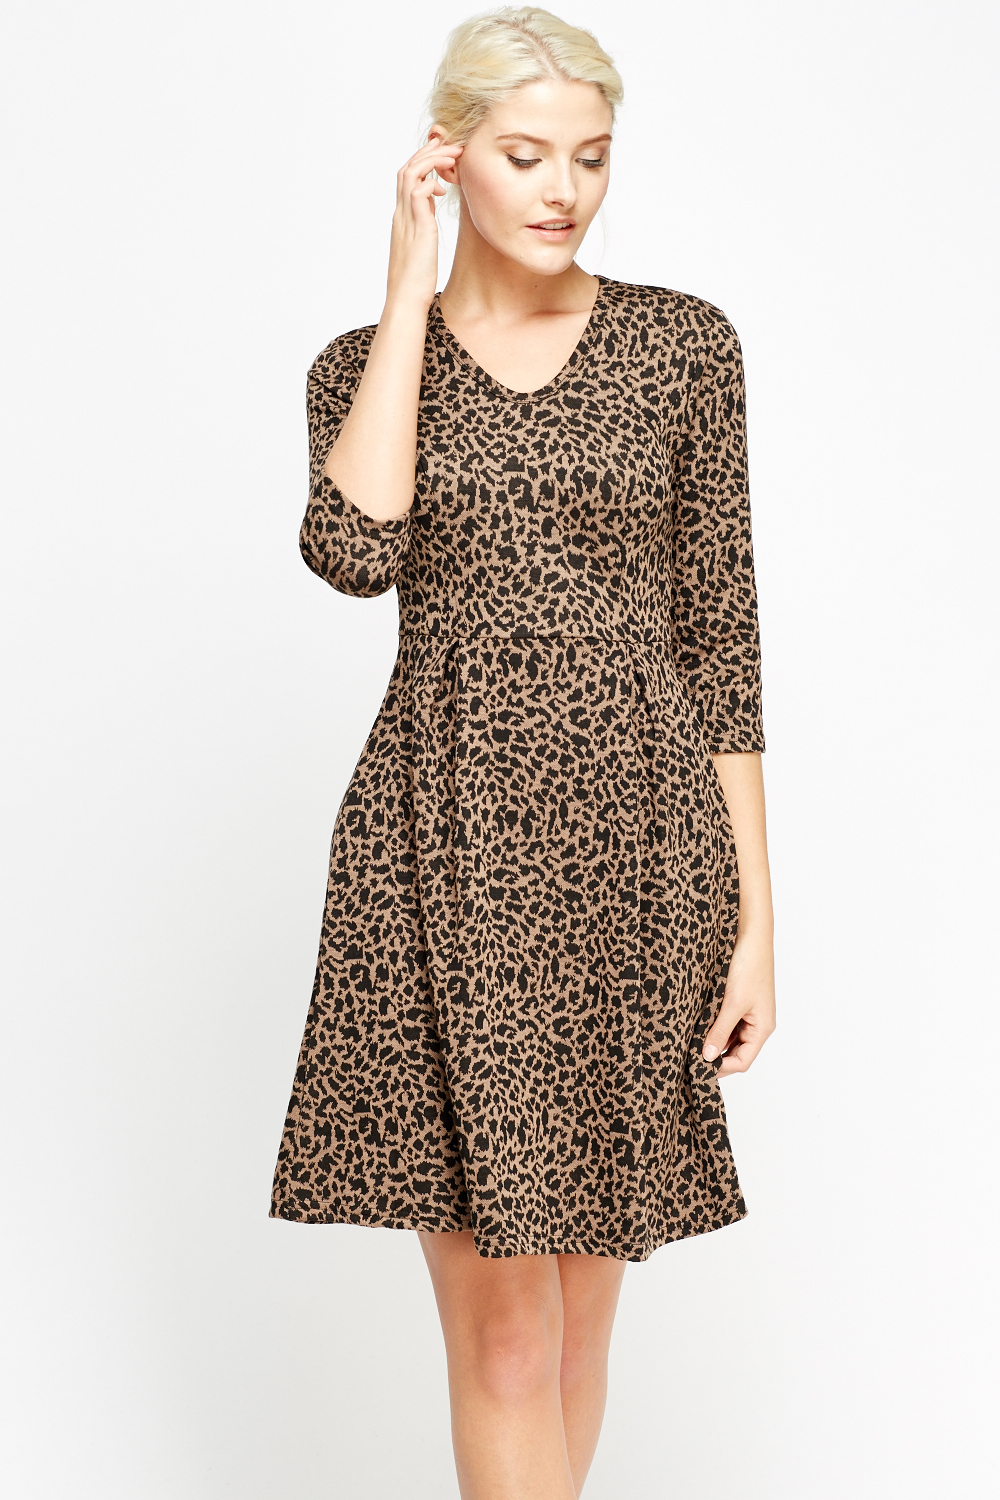 Leopard Print Skater Dress - Just $7